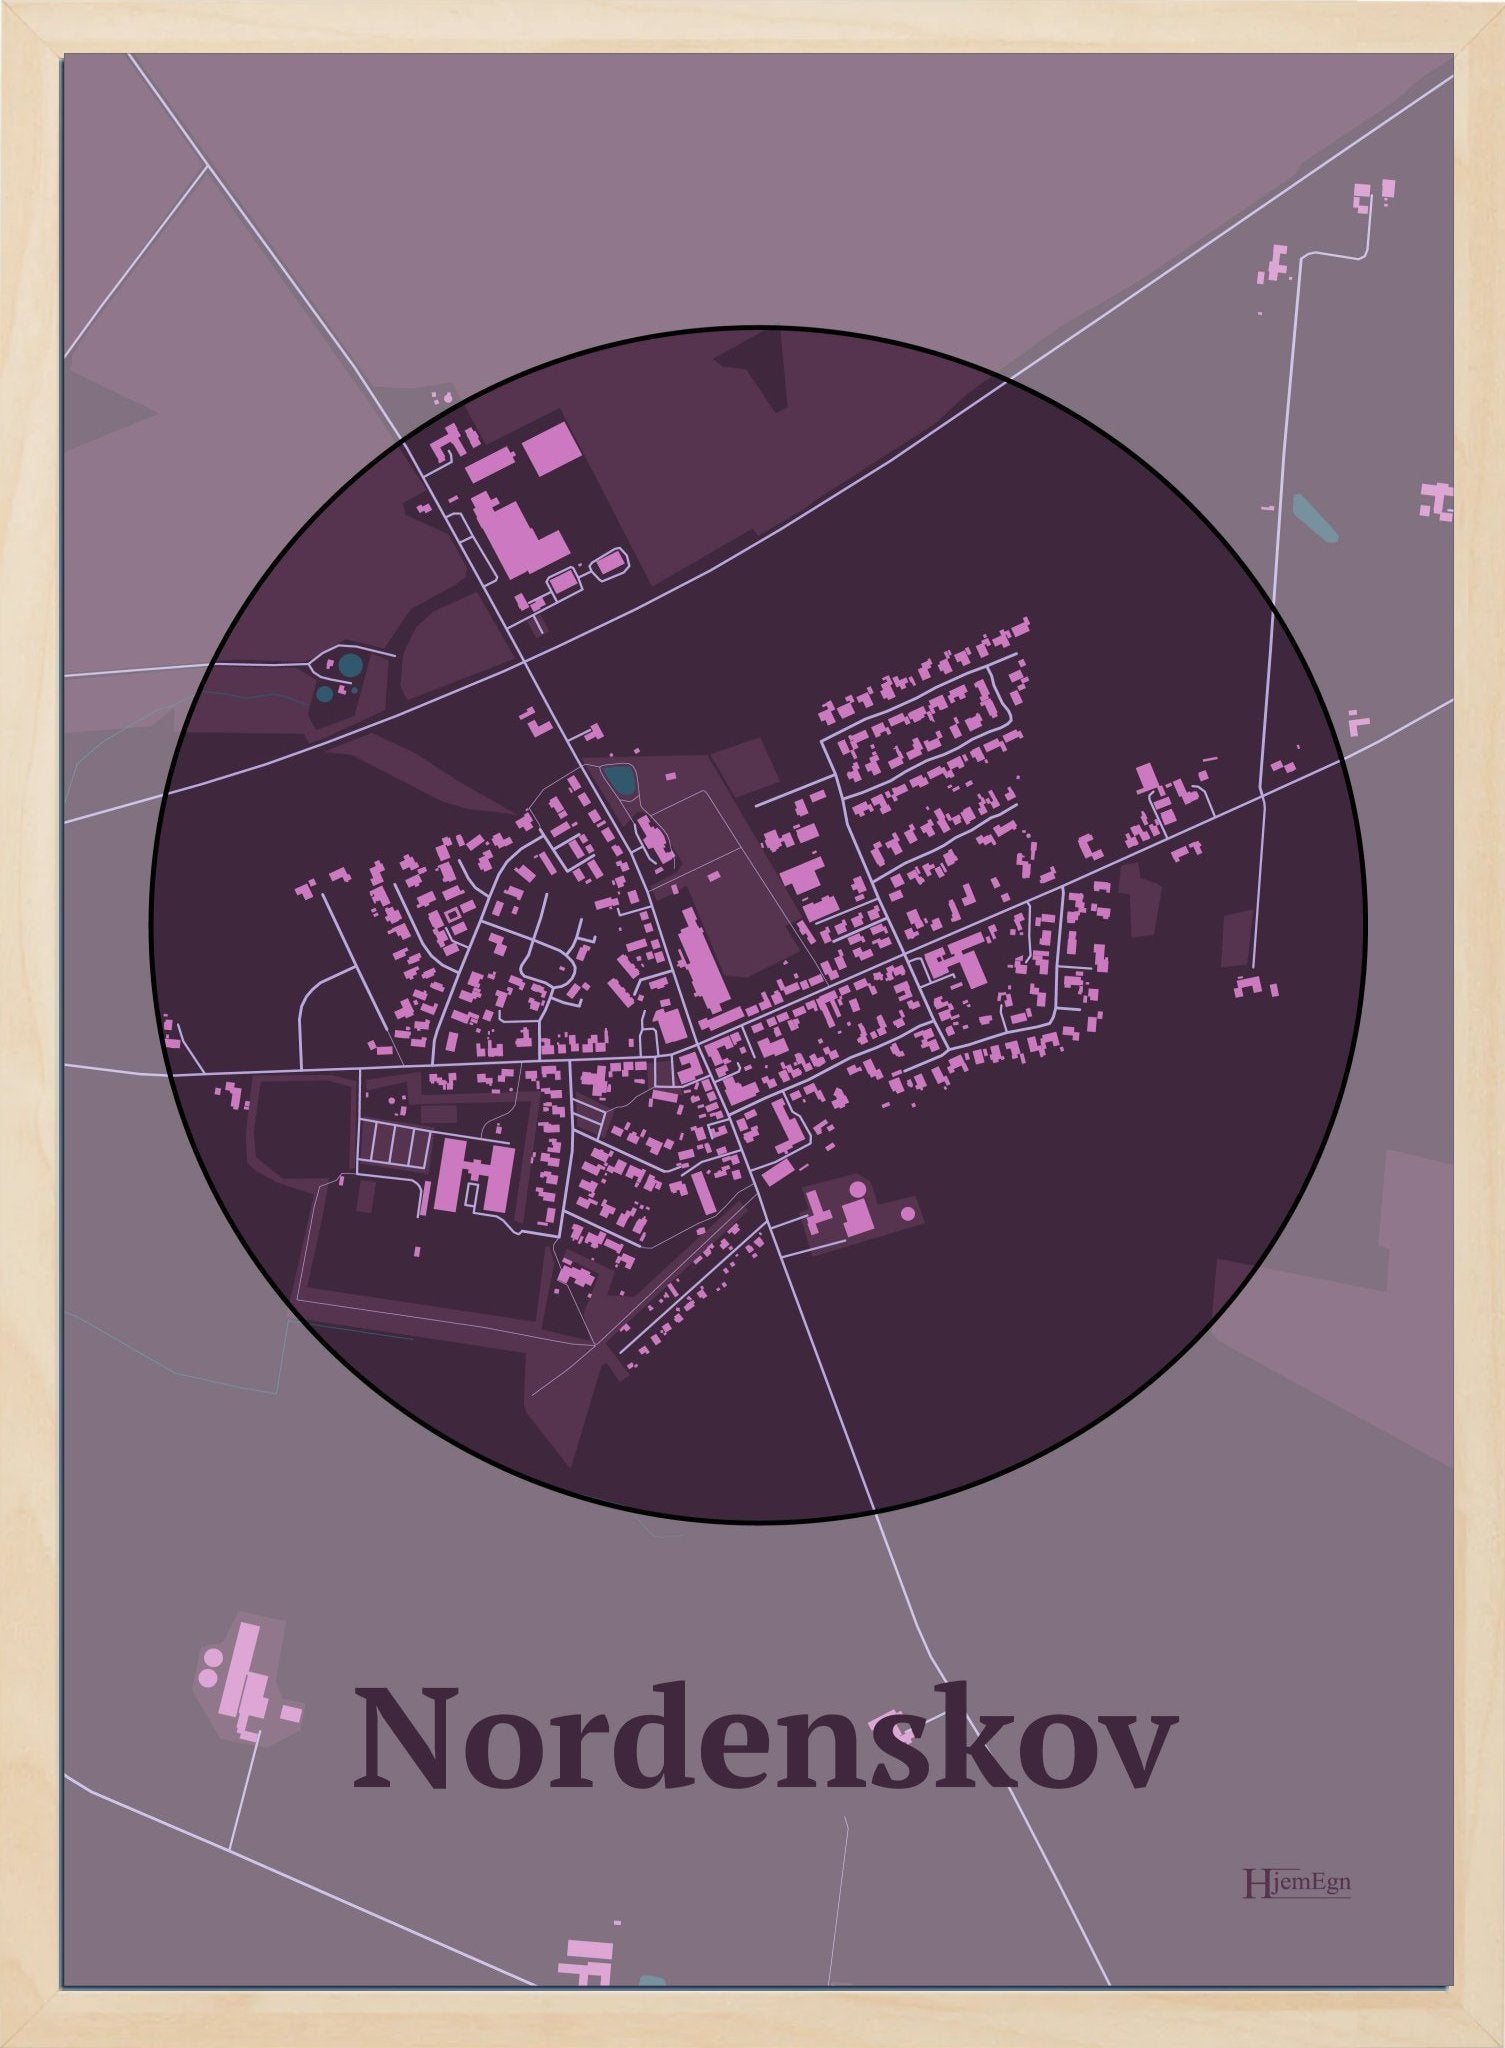 Nordenskov plakat i farve mørk rød og HjemEgn.dk design centrum. Design bykort for Nordenskov